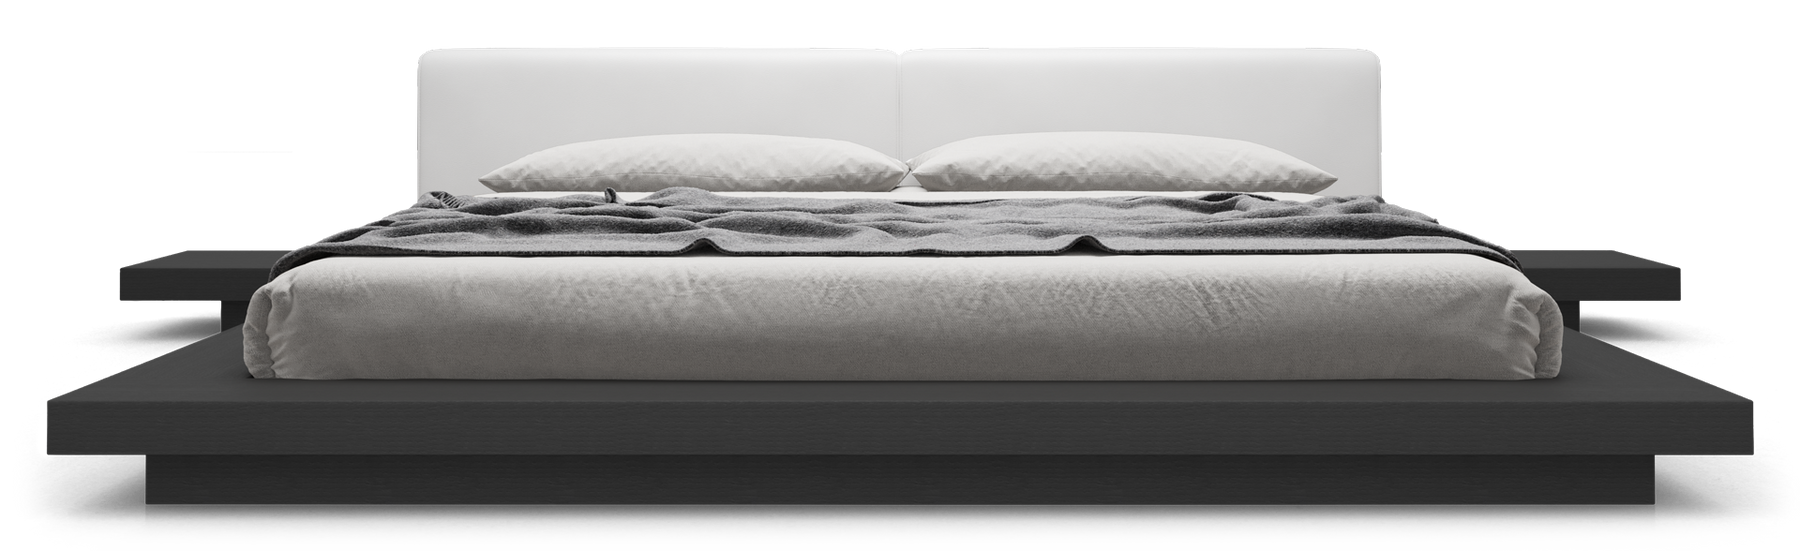 Worth Bed - Modern Beds by Modloft